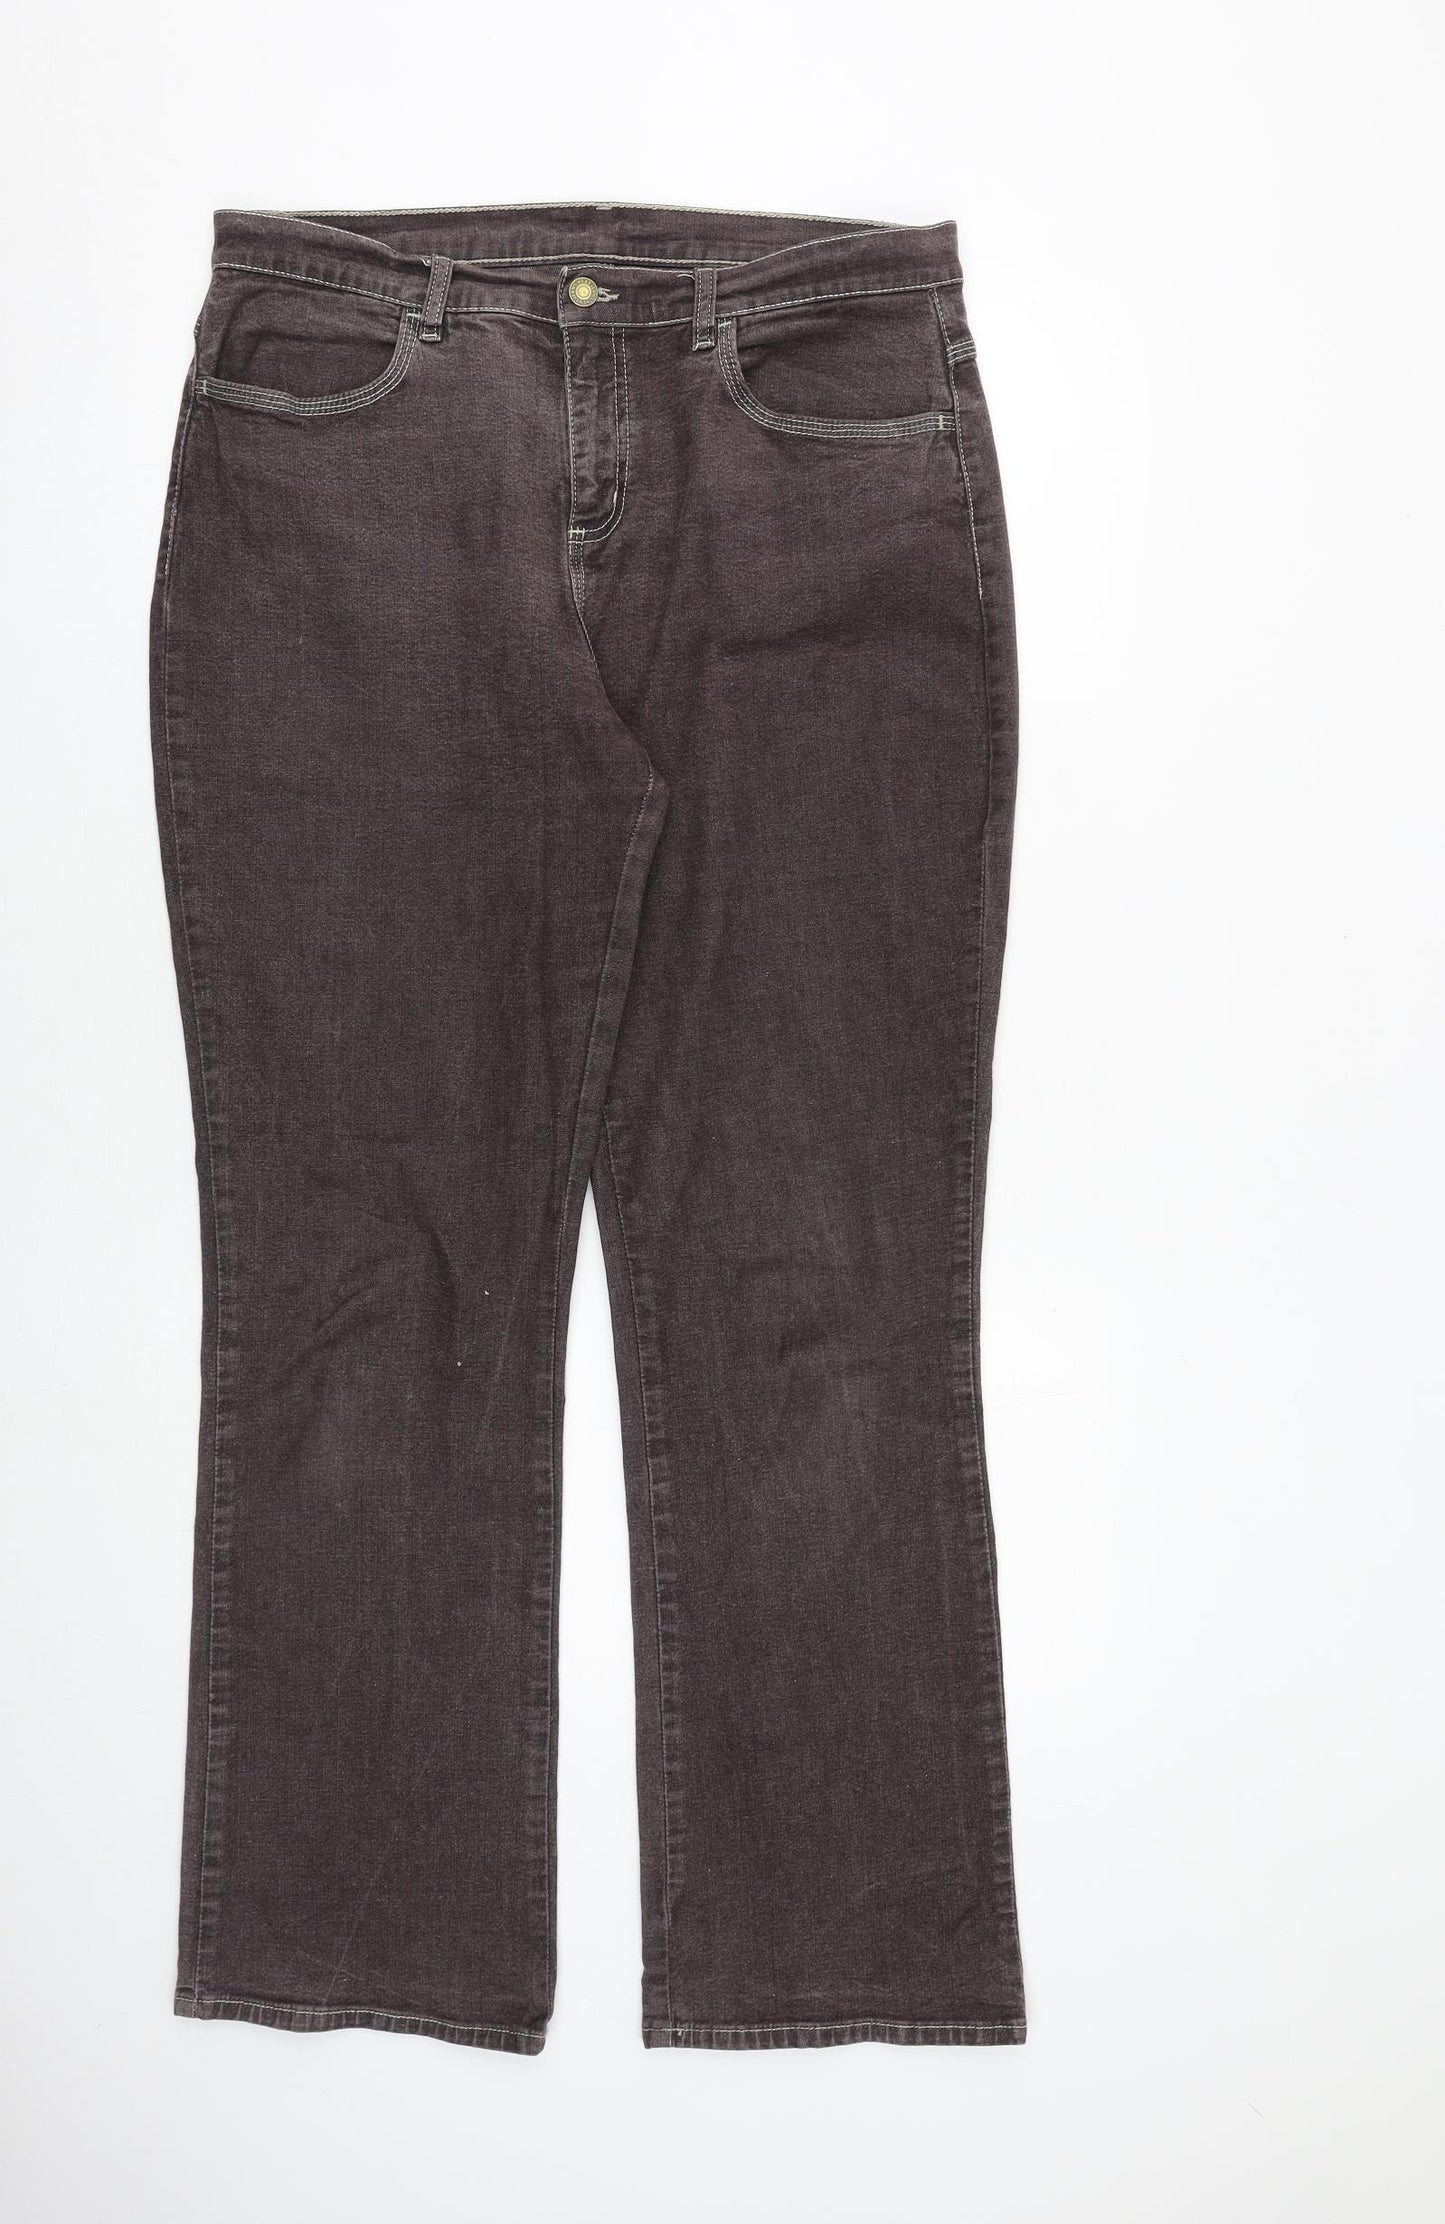 NEXT Womens Grey Cotton Bootcut Jeans Size 16 L31 in Regular Zip